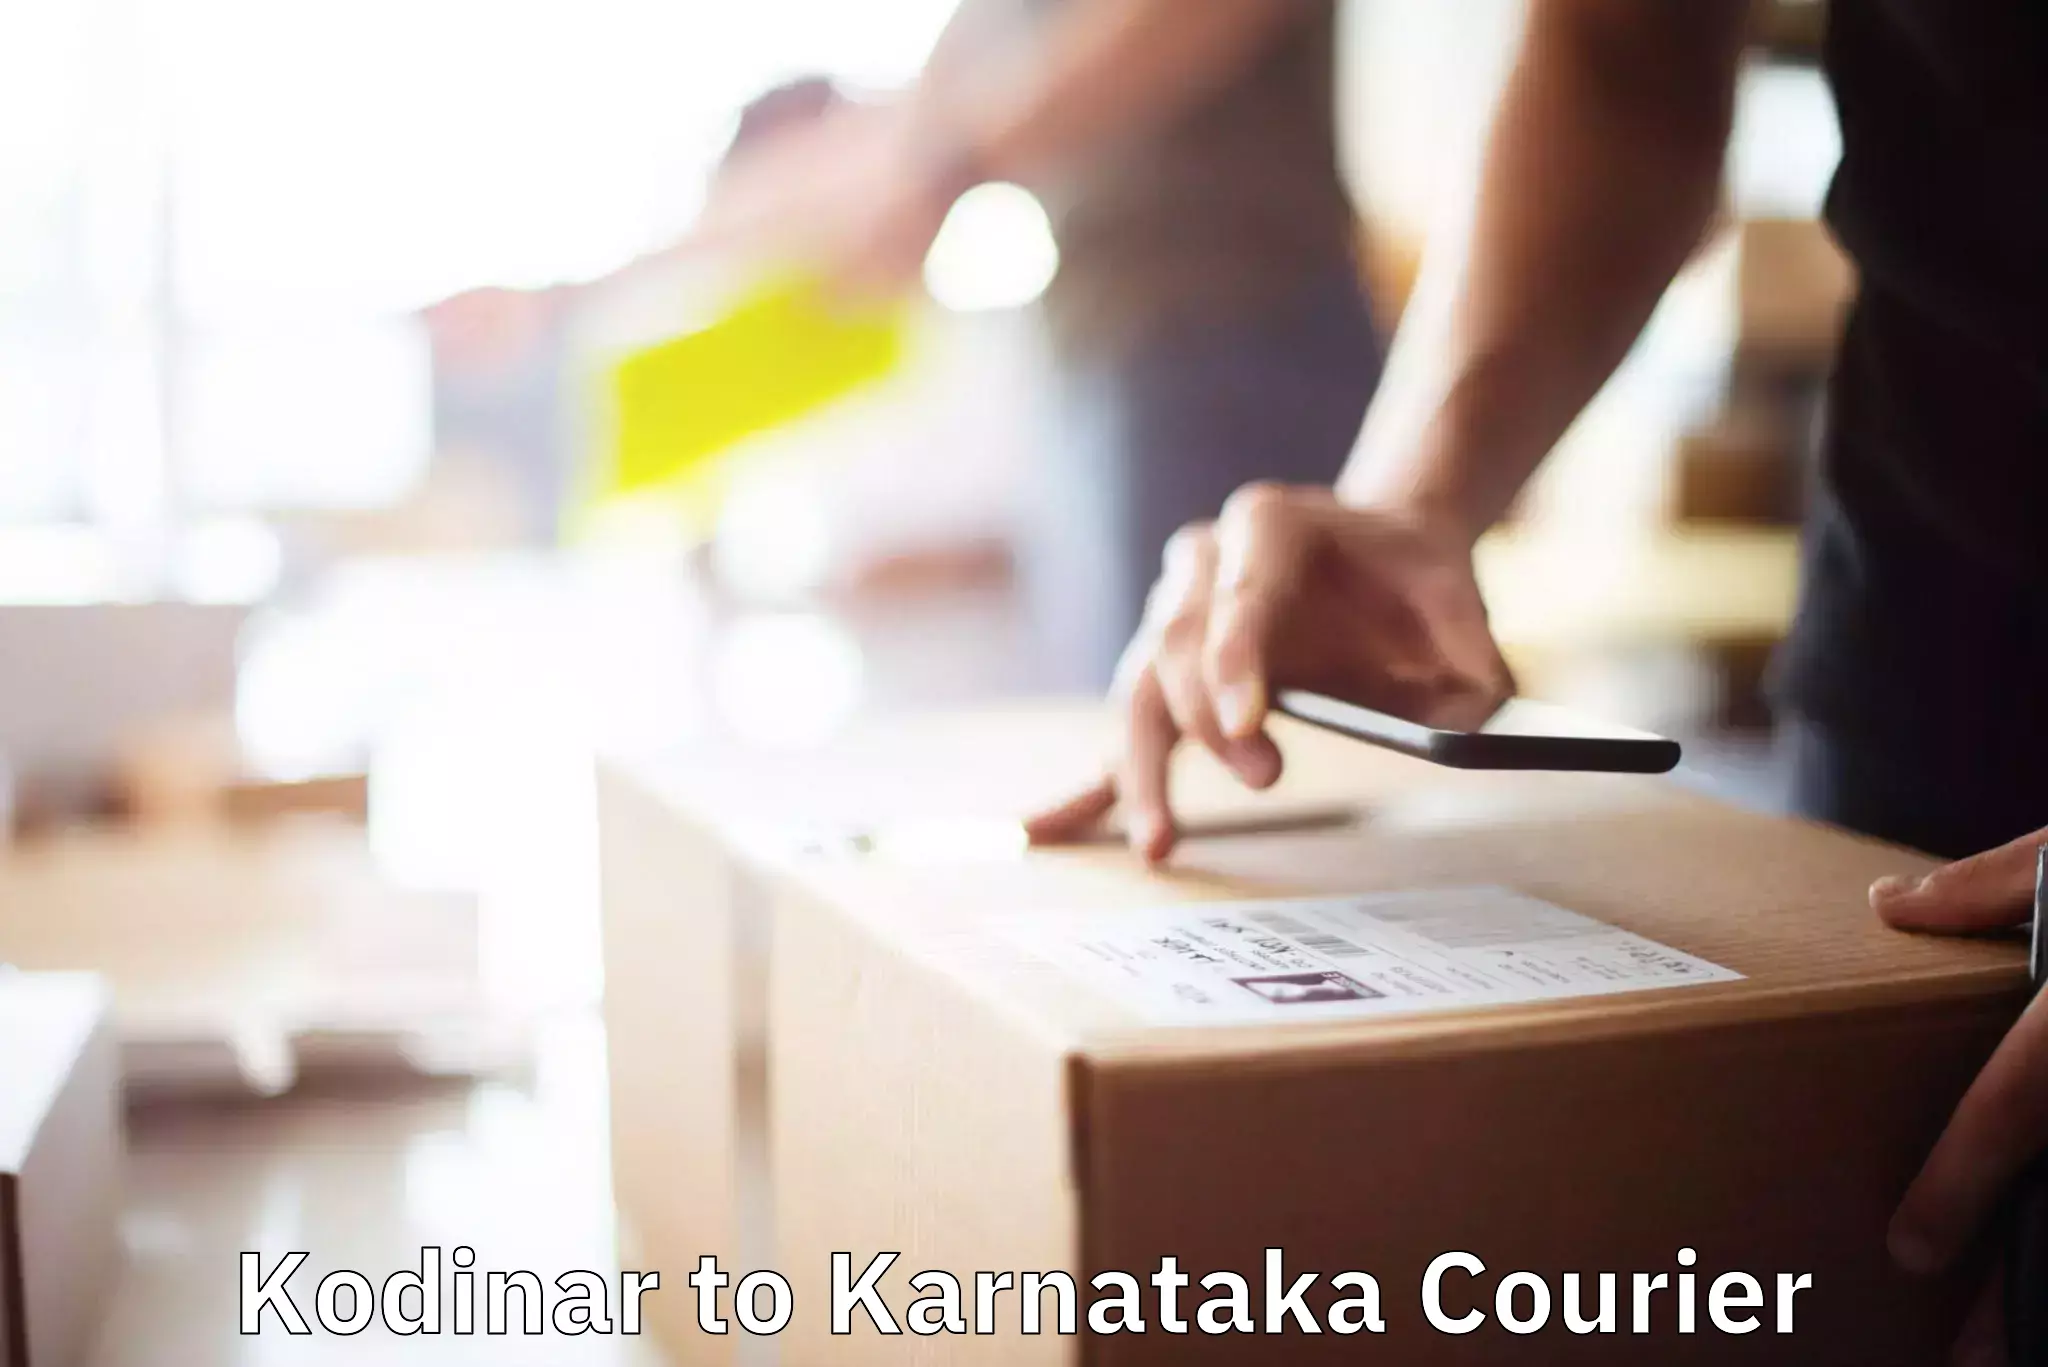 Efficient moving strategies Kodinar to Karnataka